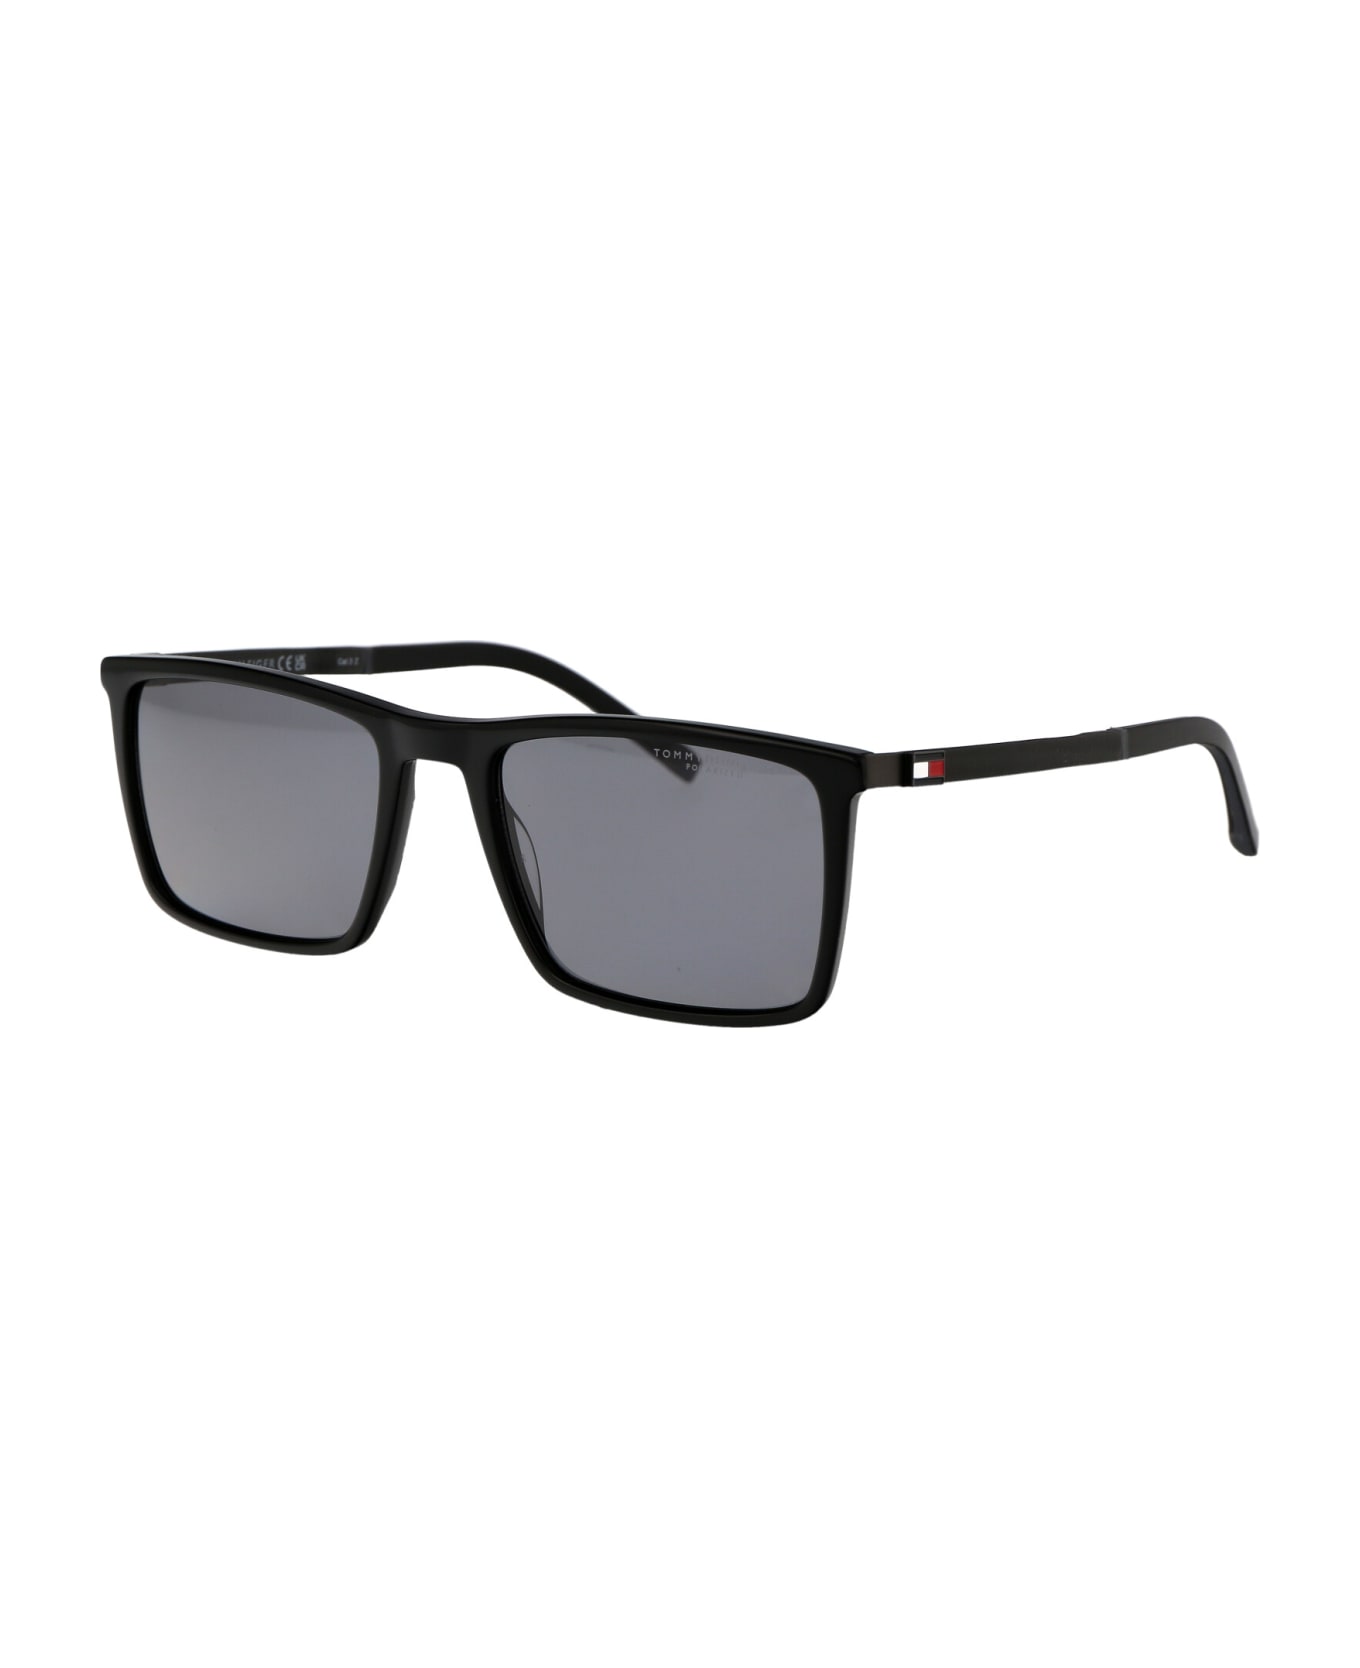 Tommy Hilfiger Th 2077/s Sunglasses - 807M9 BLACK サングラス